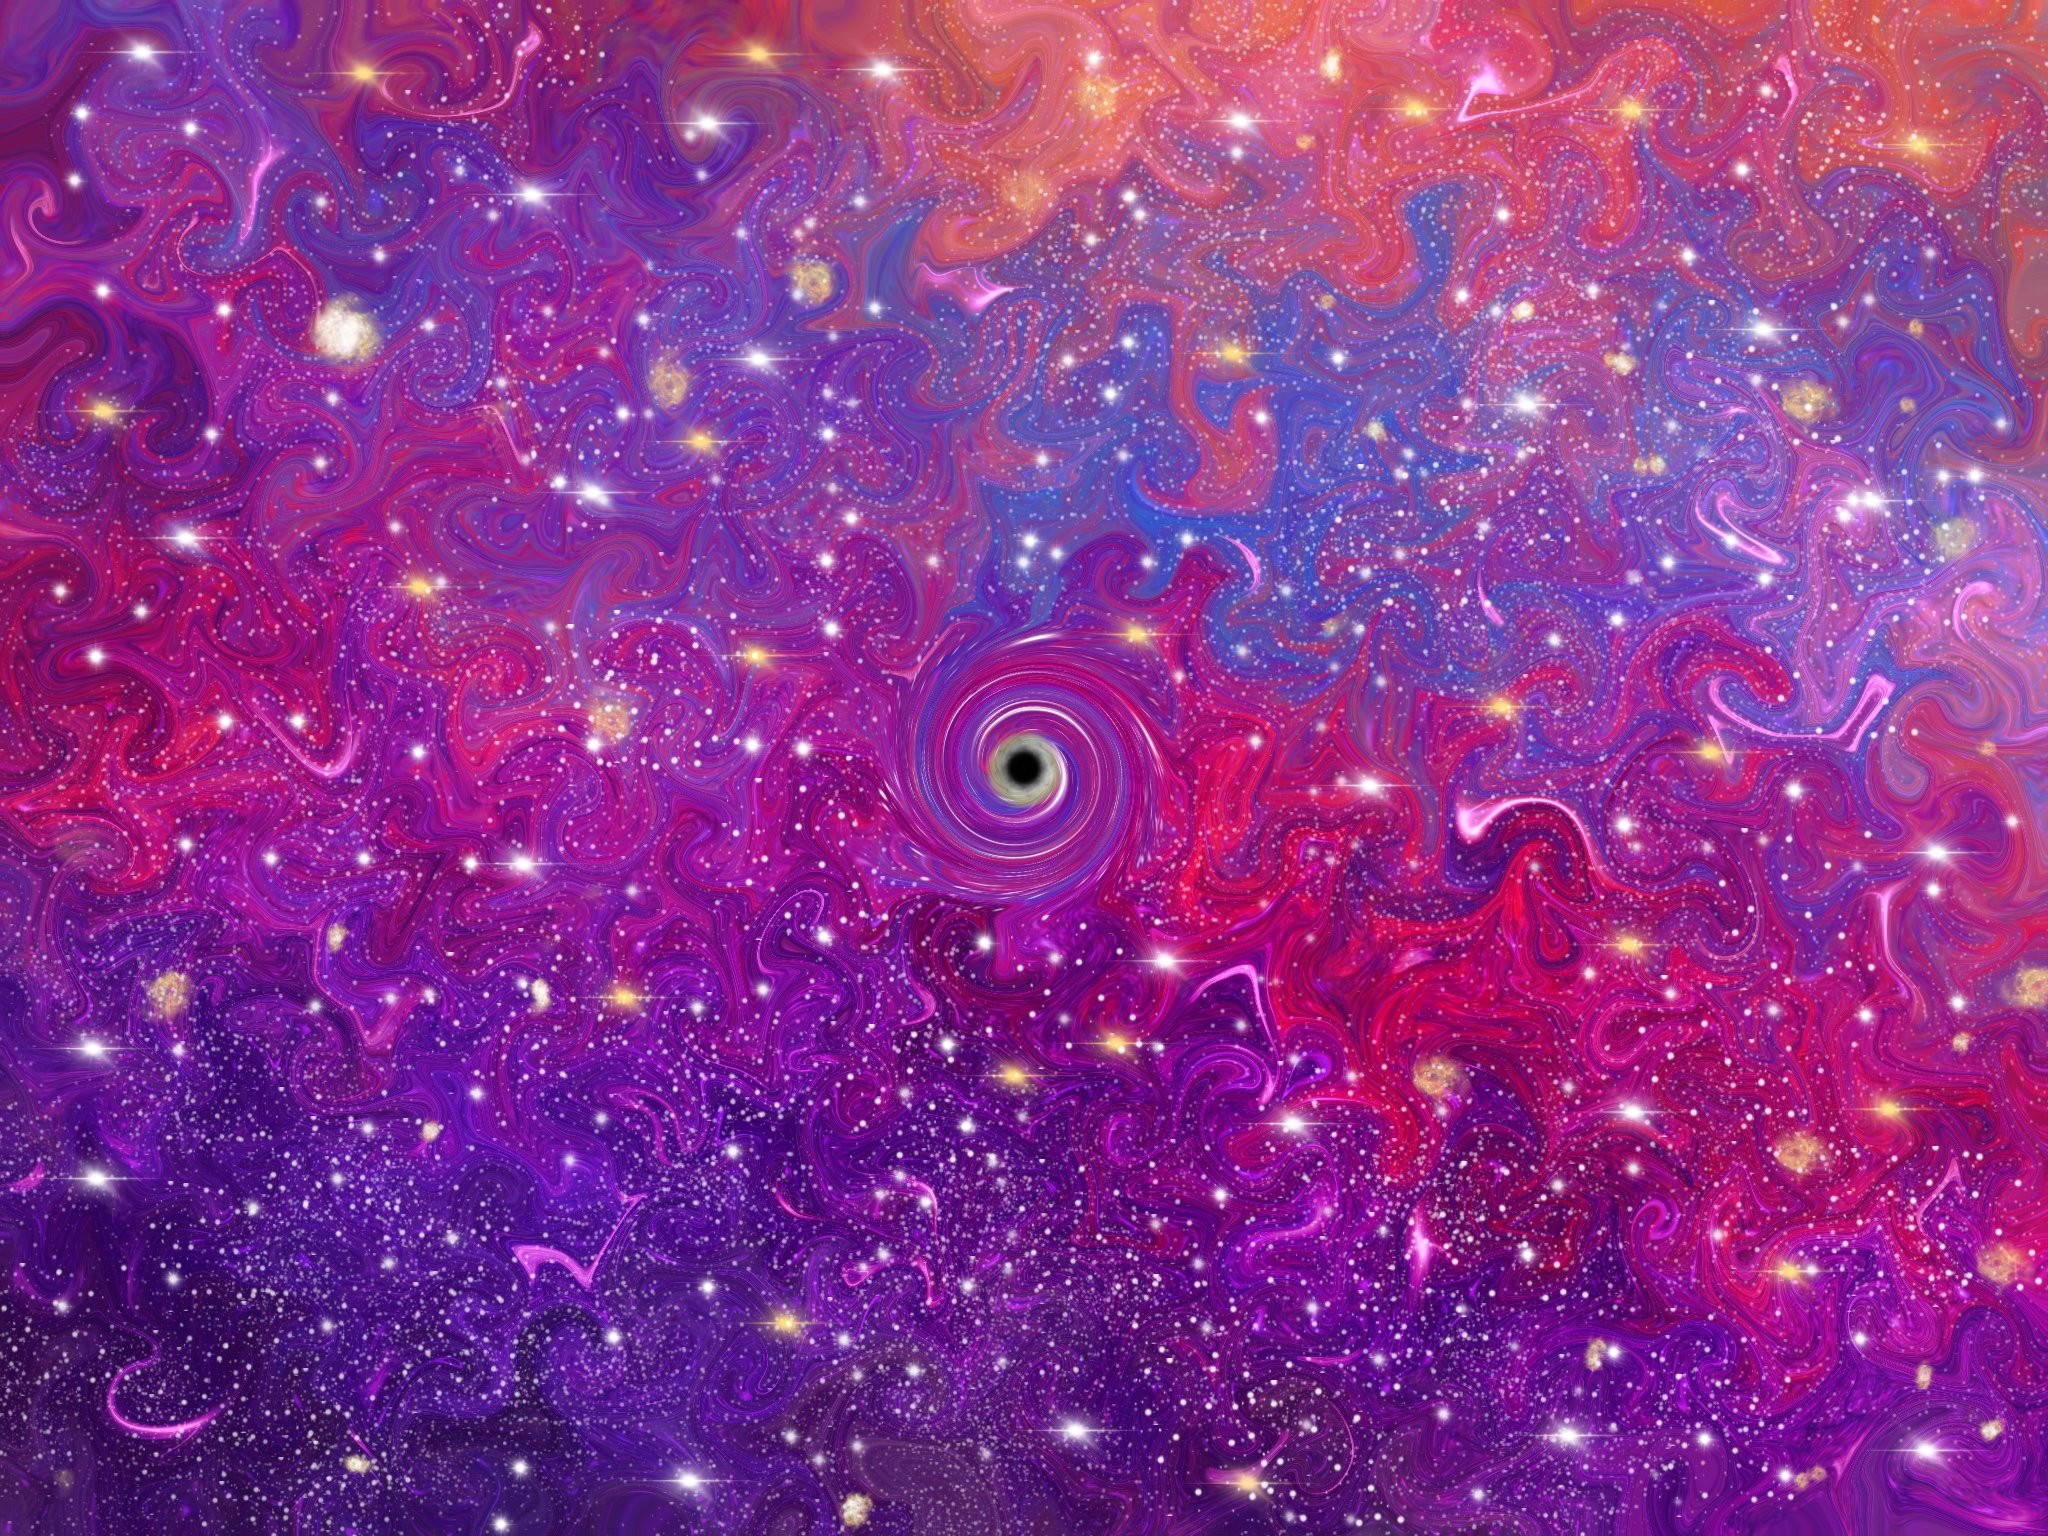 Swirly_Black_hole_Cosmic_Pink.jpg